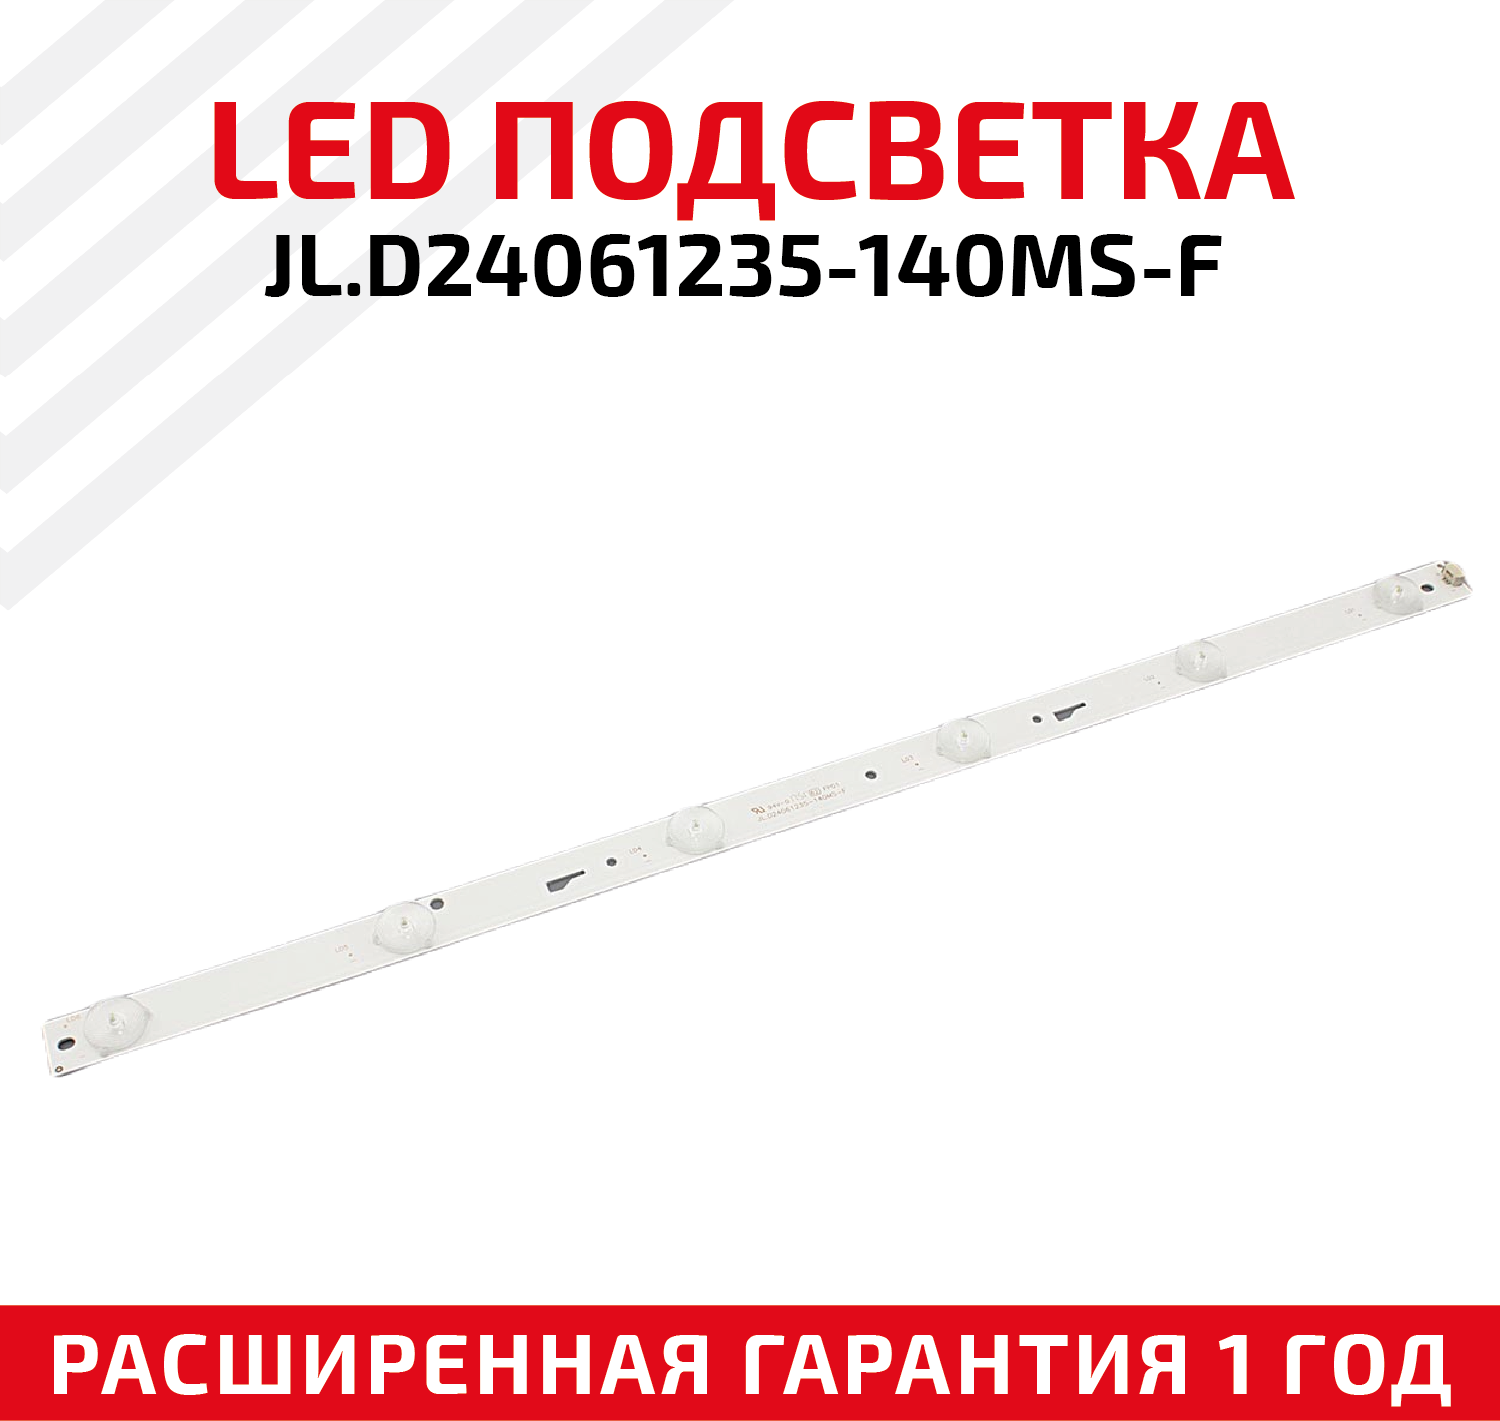 LED подсветка (светодиодная планка) для телевизора JL. D24061235-140MS-F